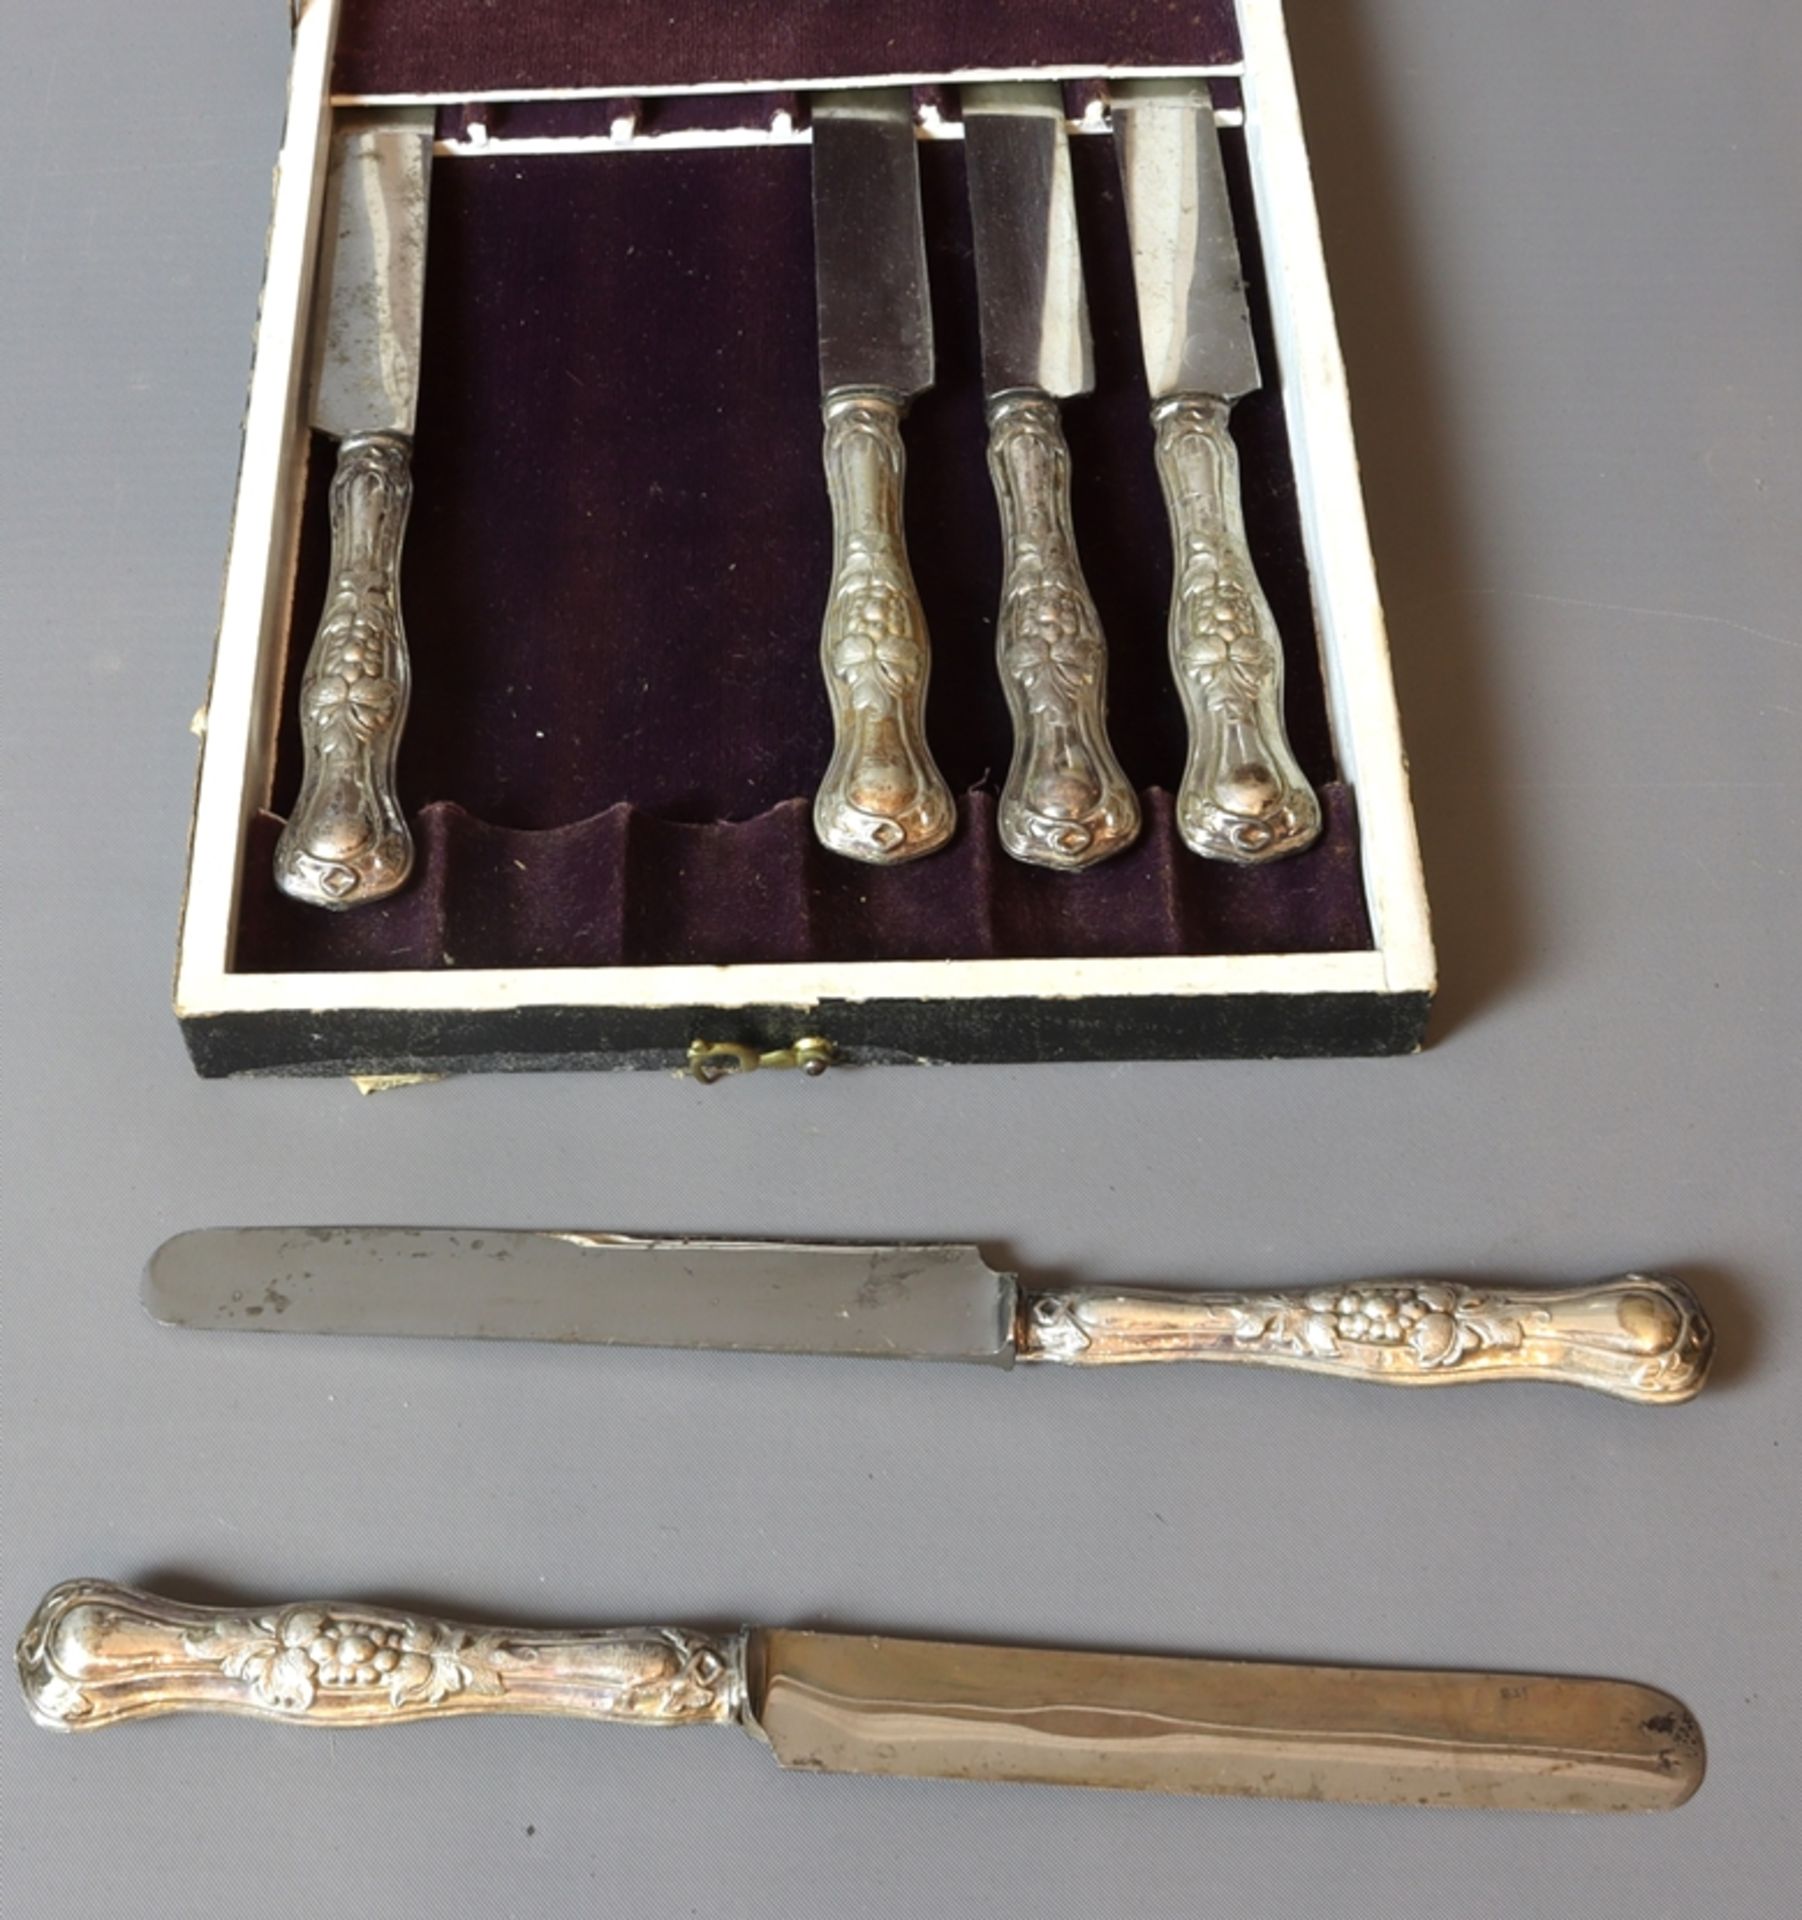 6 silver fruit knives, Historism circa 1880-1900, German - Image 2 of 4